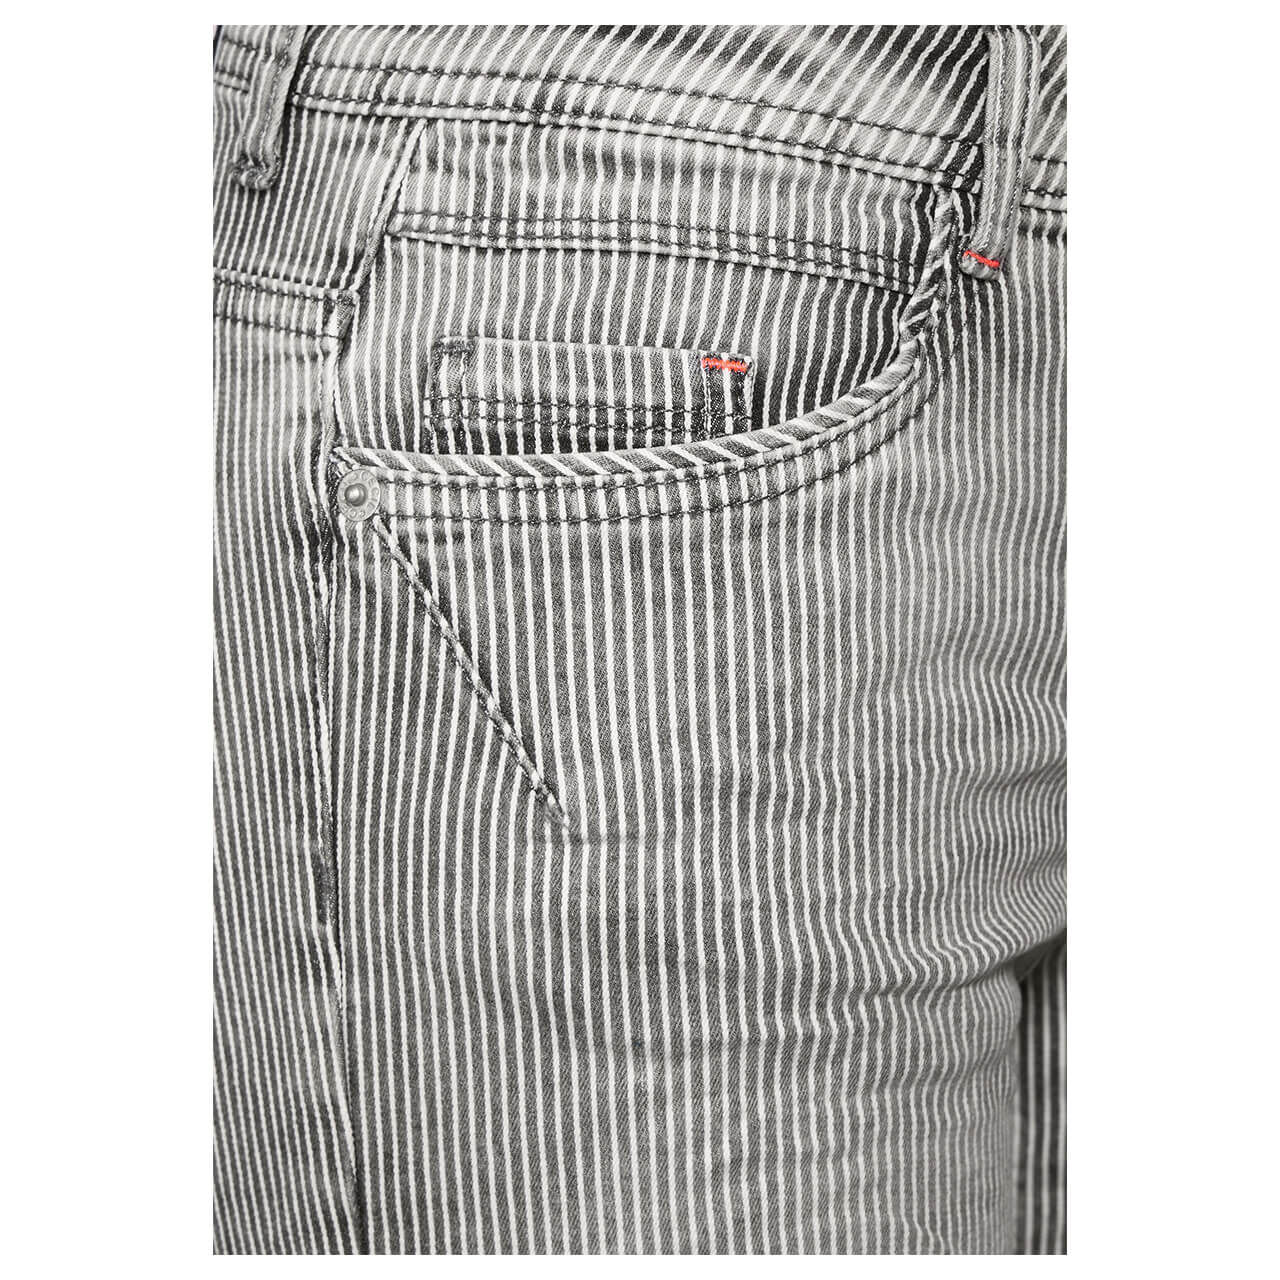 Cecil Scarlett Jeans Shorts light grey stripes